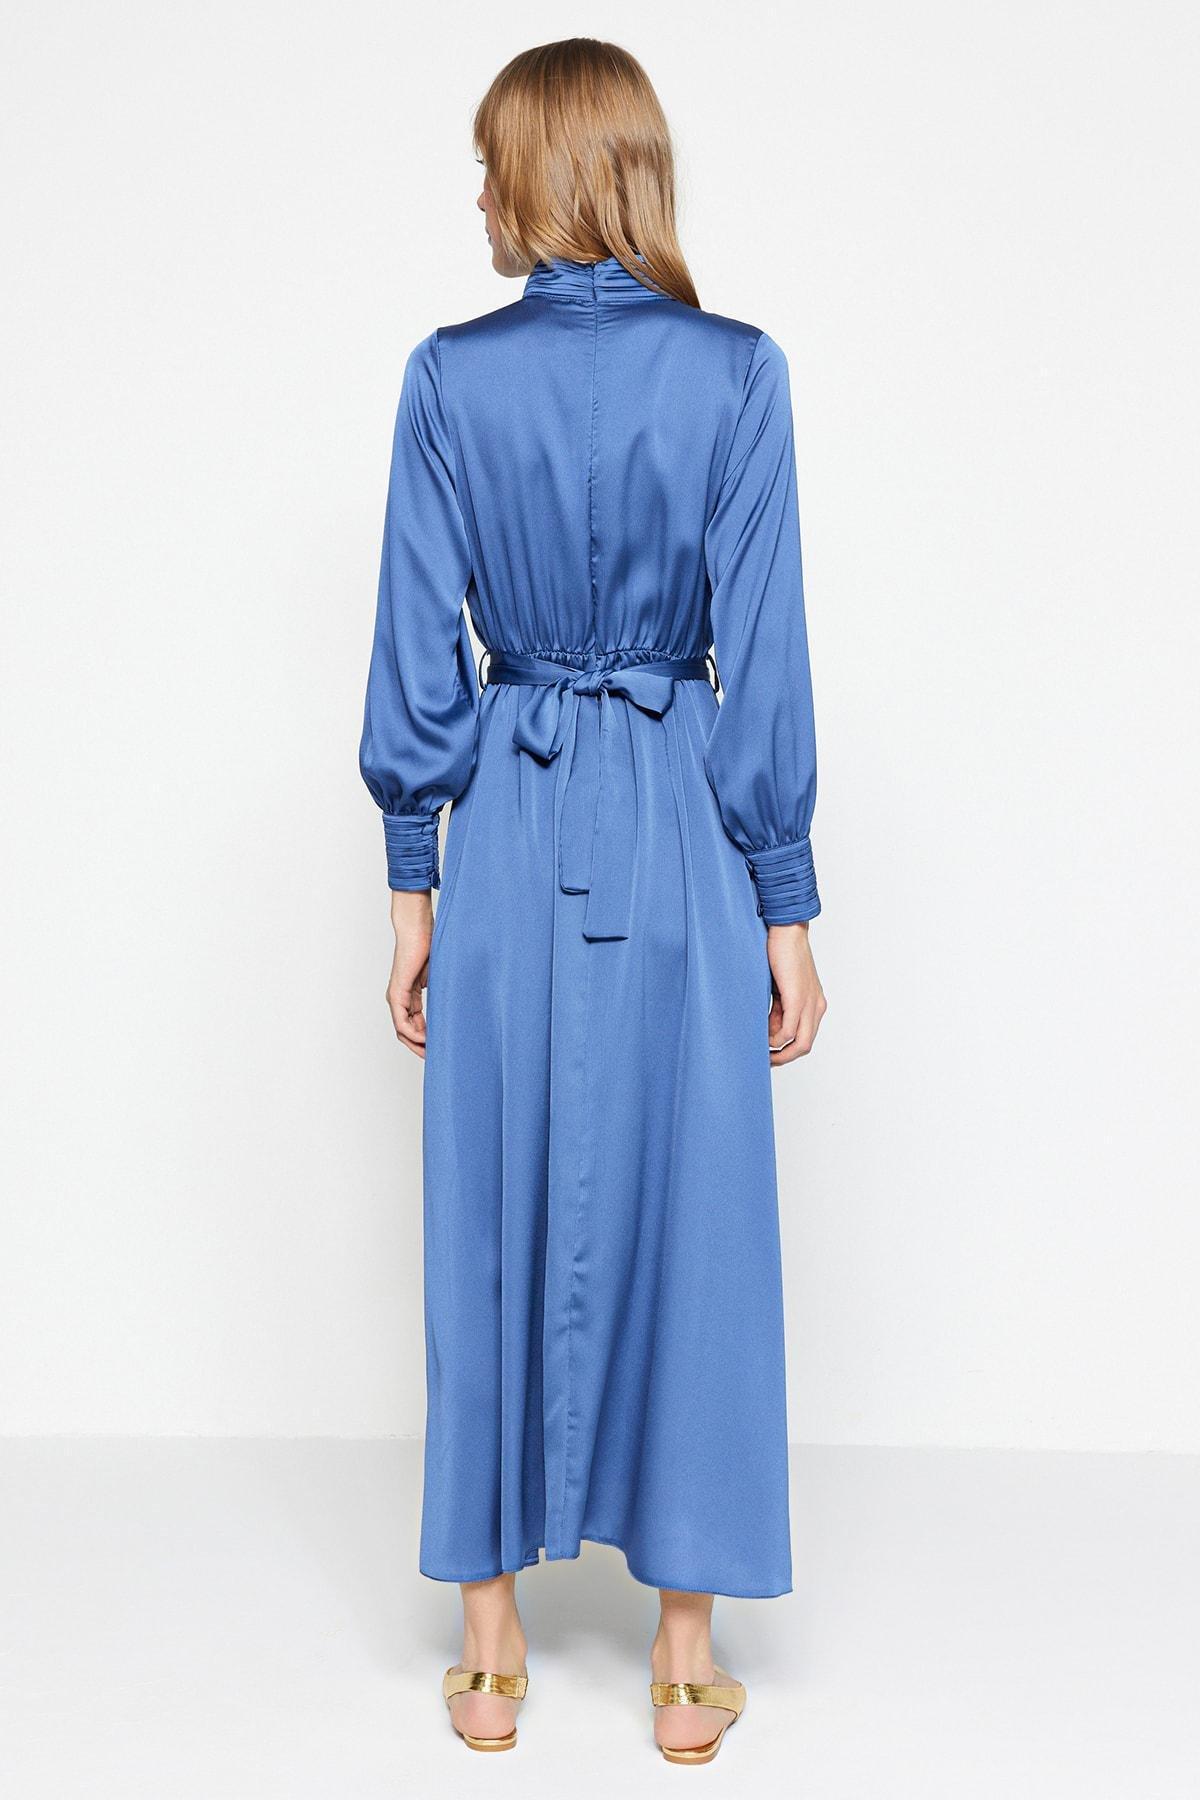 Trendyol - Blue Evening Dress